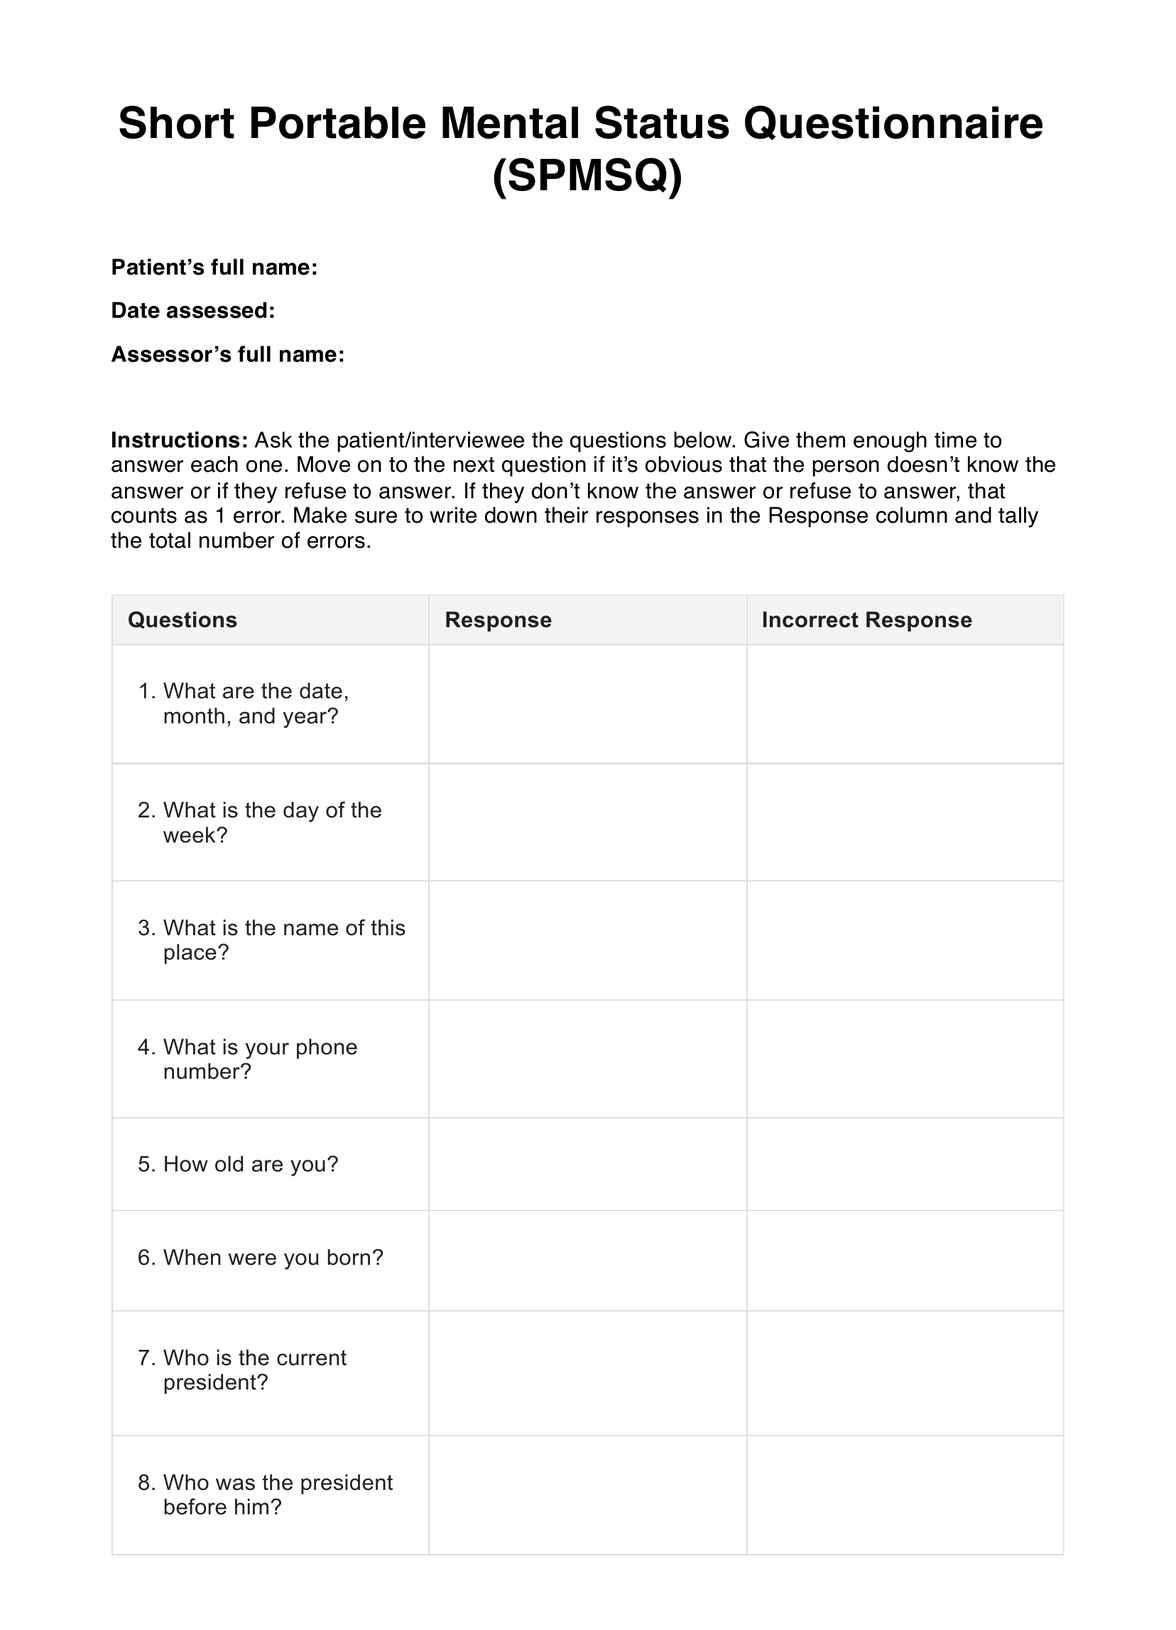 Short Portable Mental Status Questionnaire (SPMSQ) PDF Example